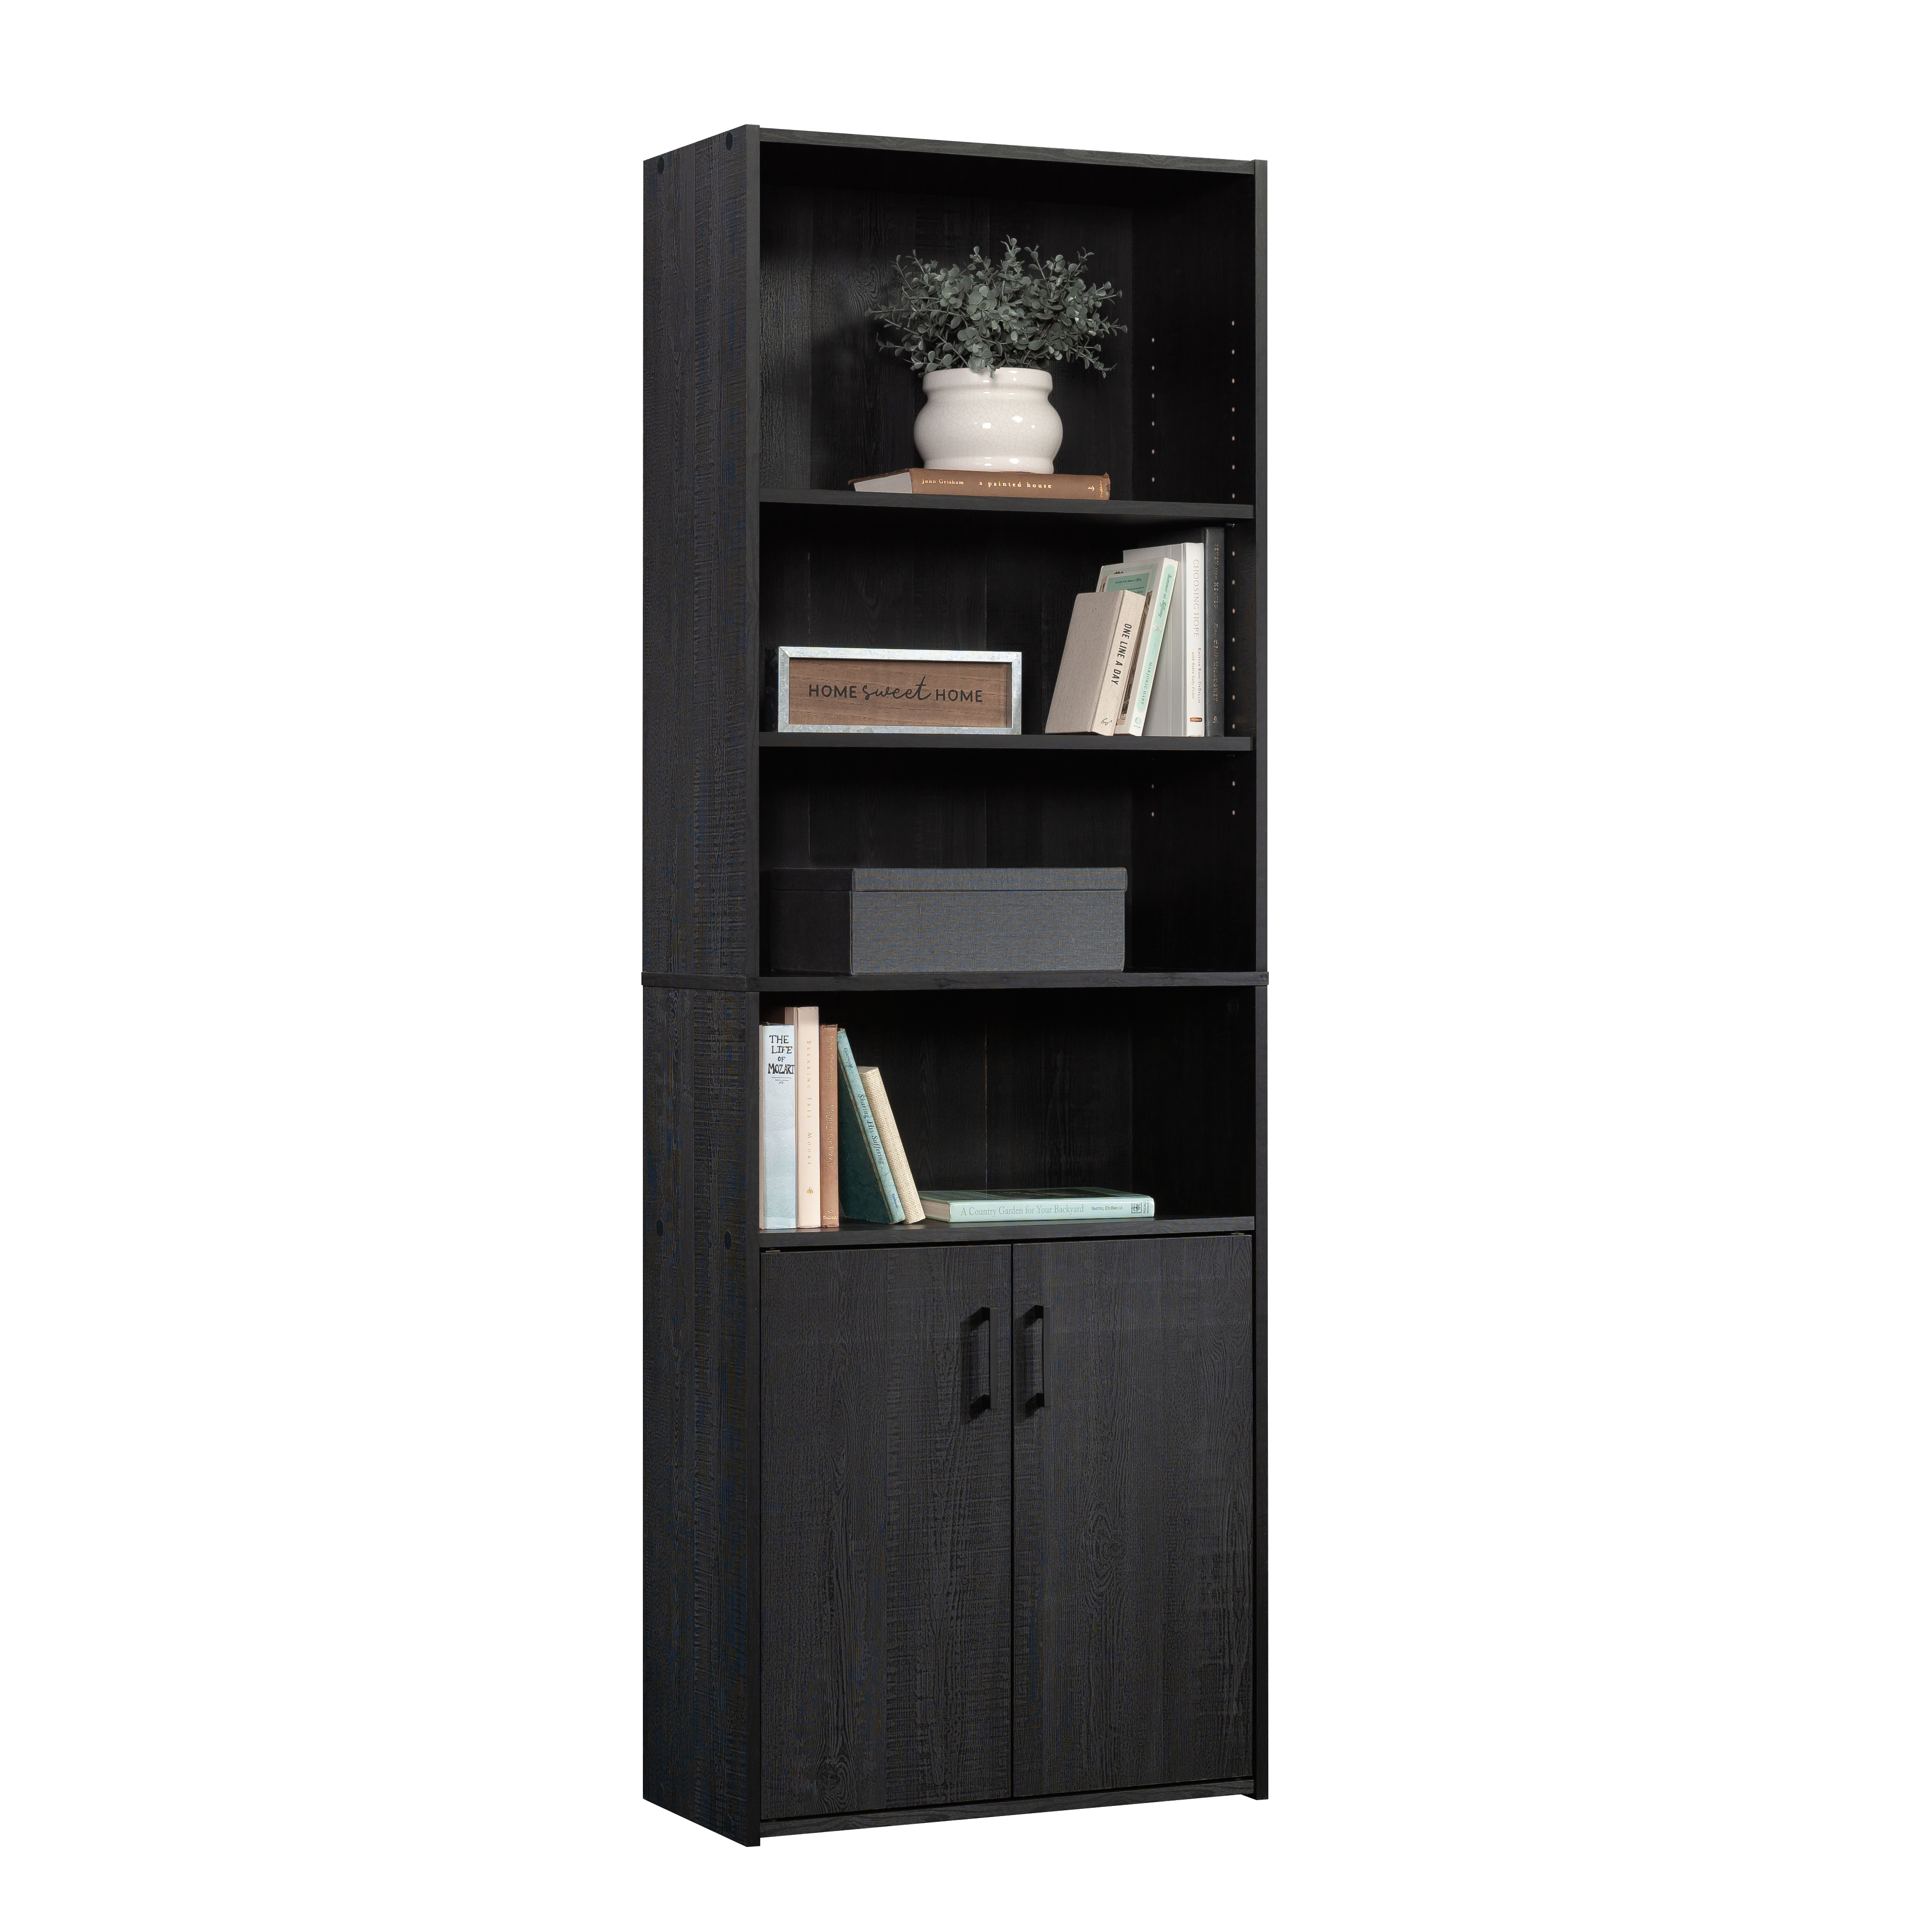 Mainstays Traditional 5 Shelf Bookcase with Doors, Black Finish - image 4 of 10